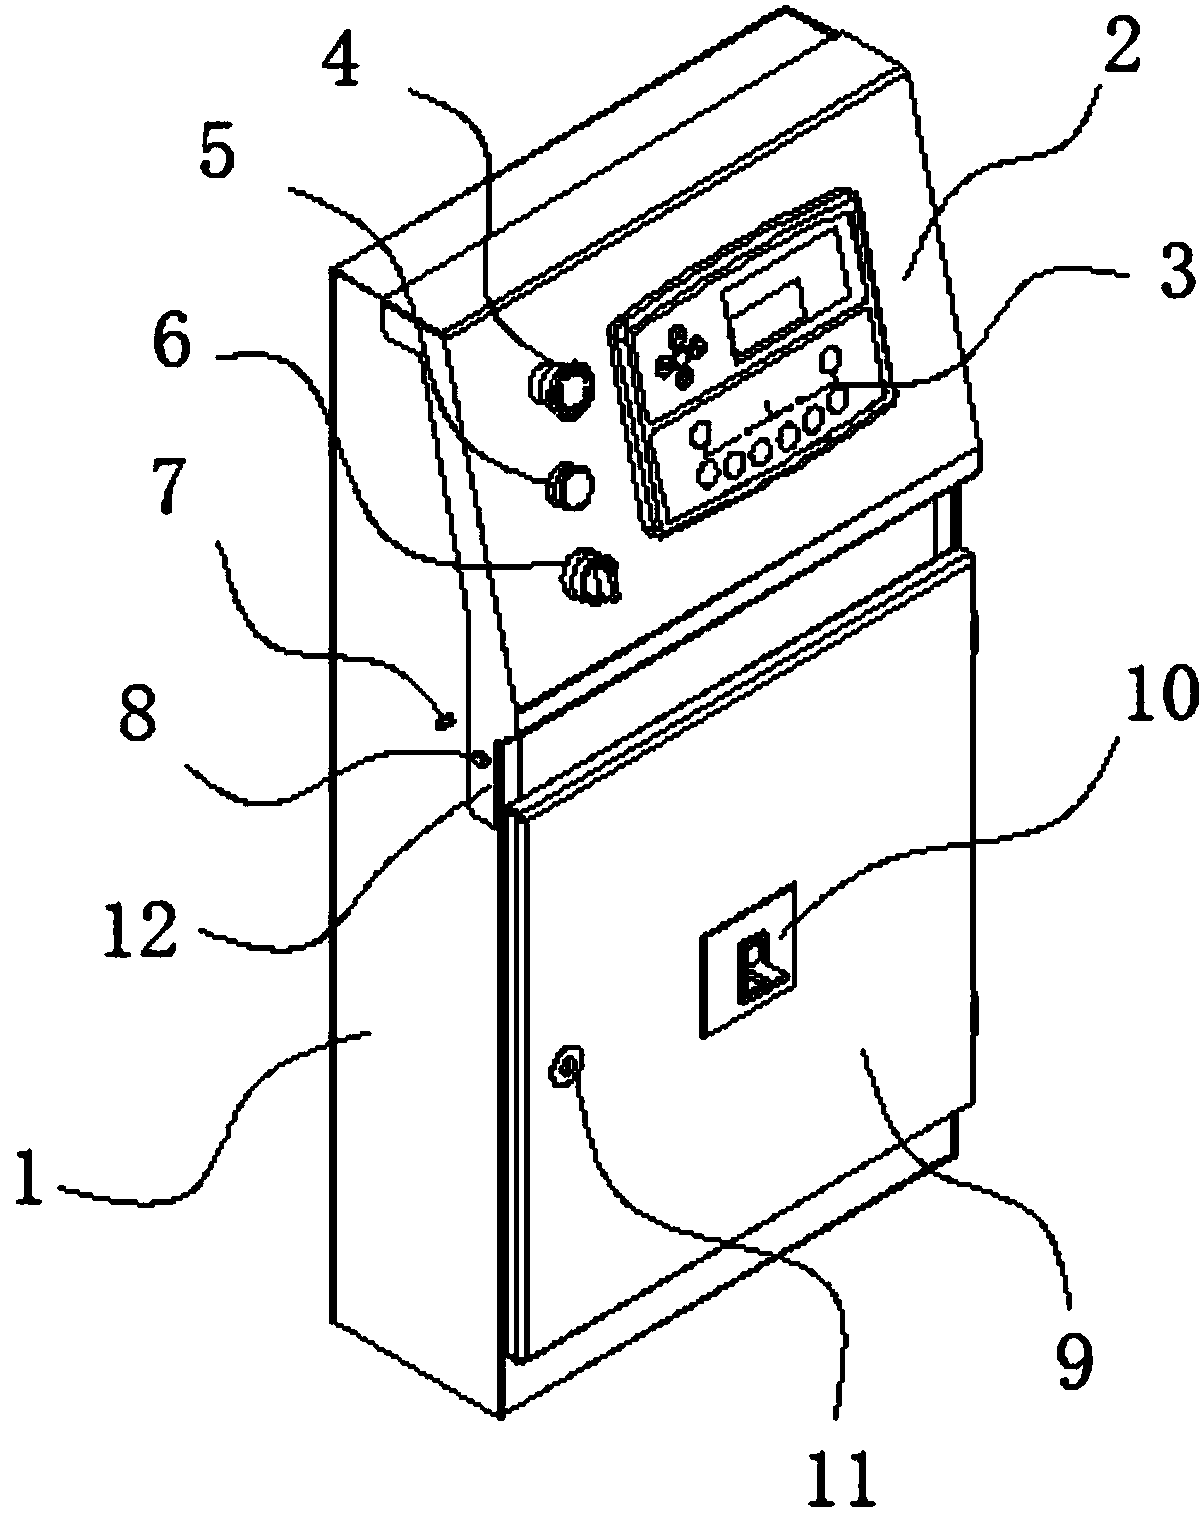 Generator set control box connecting mechanism